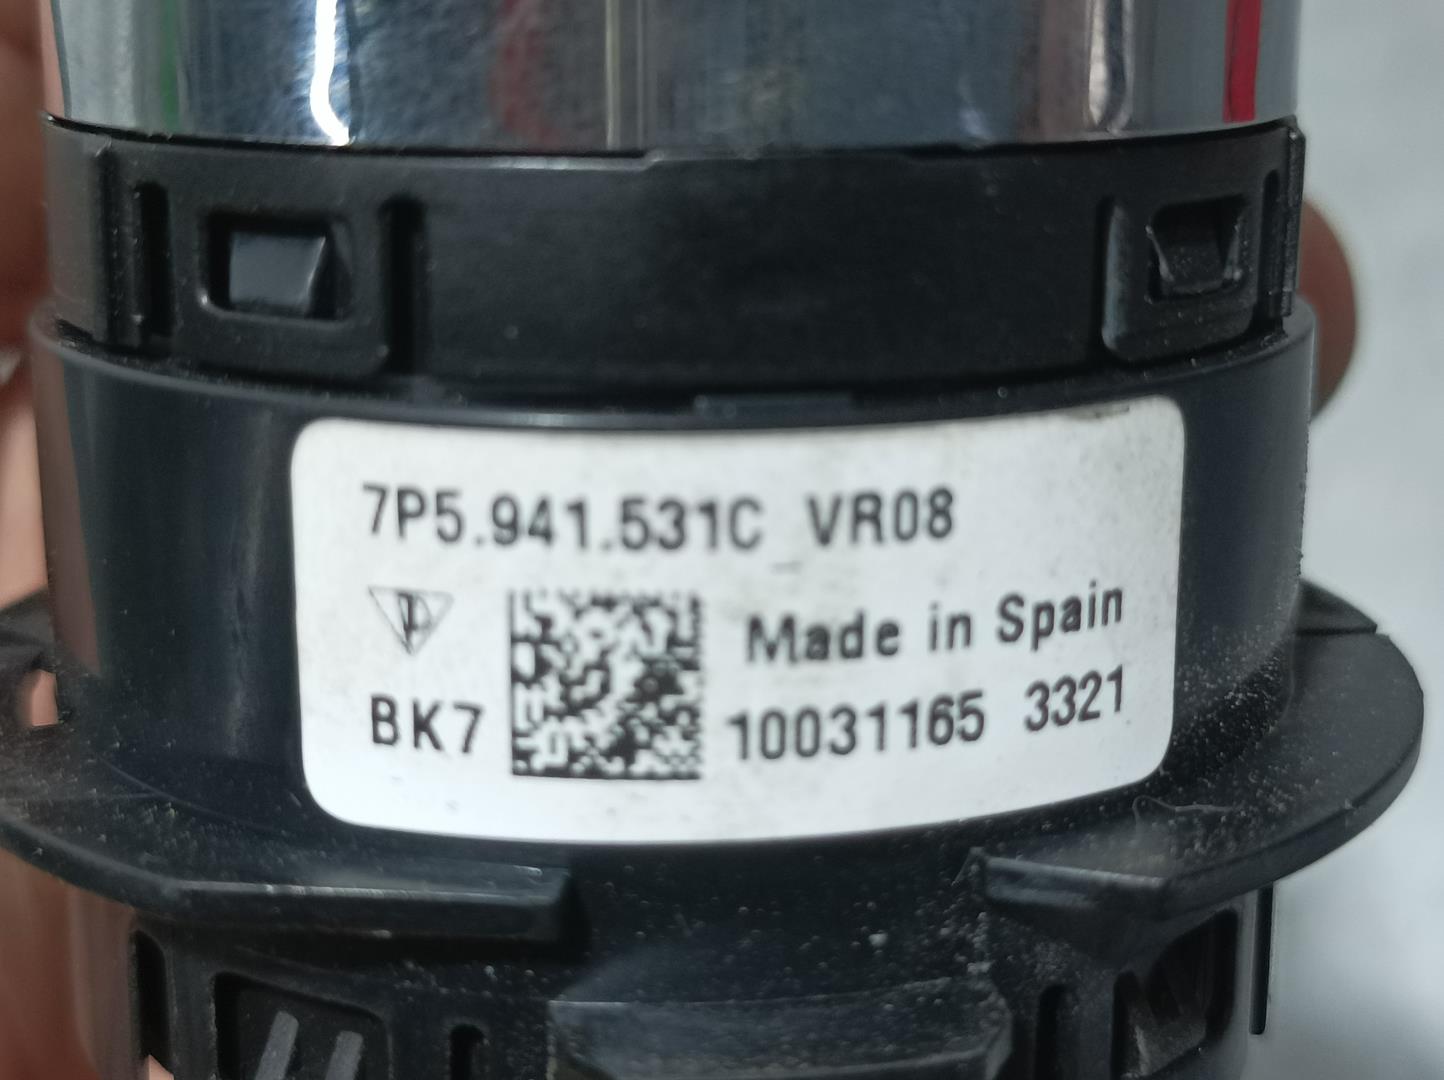 PORSCHE Cayenne 958 (2010-2018) Headlight Switch Control Unit 7P5941531C, 10031165 18709375